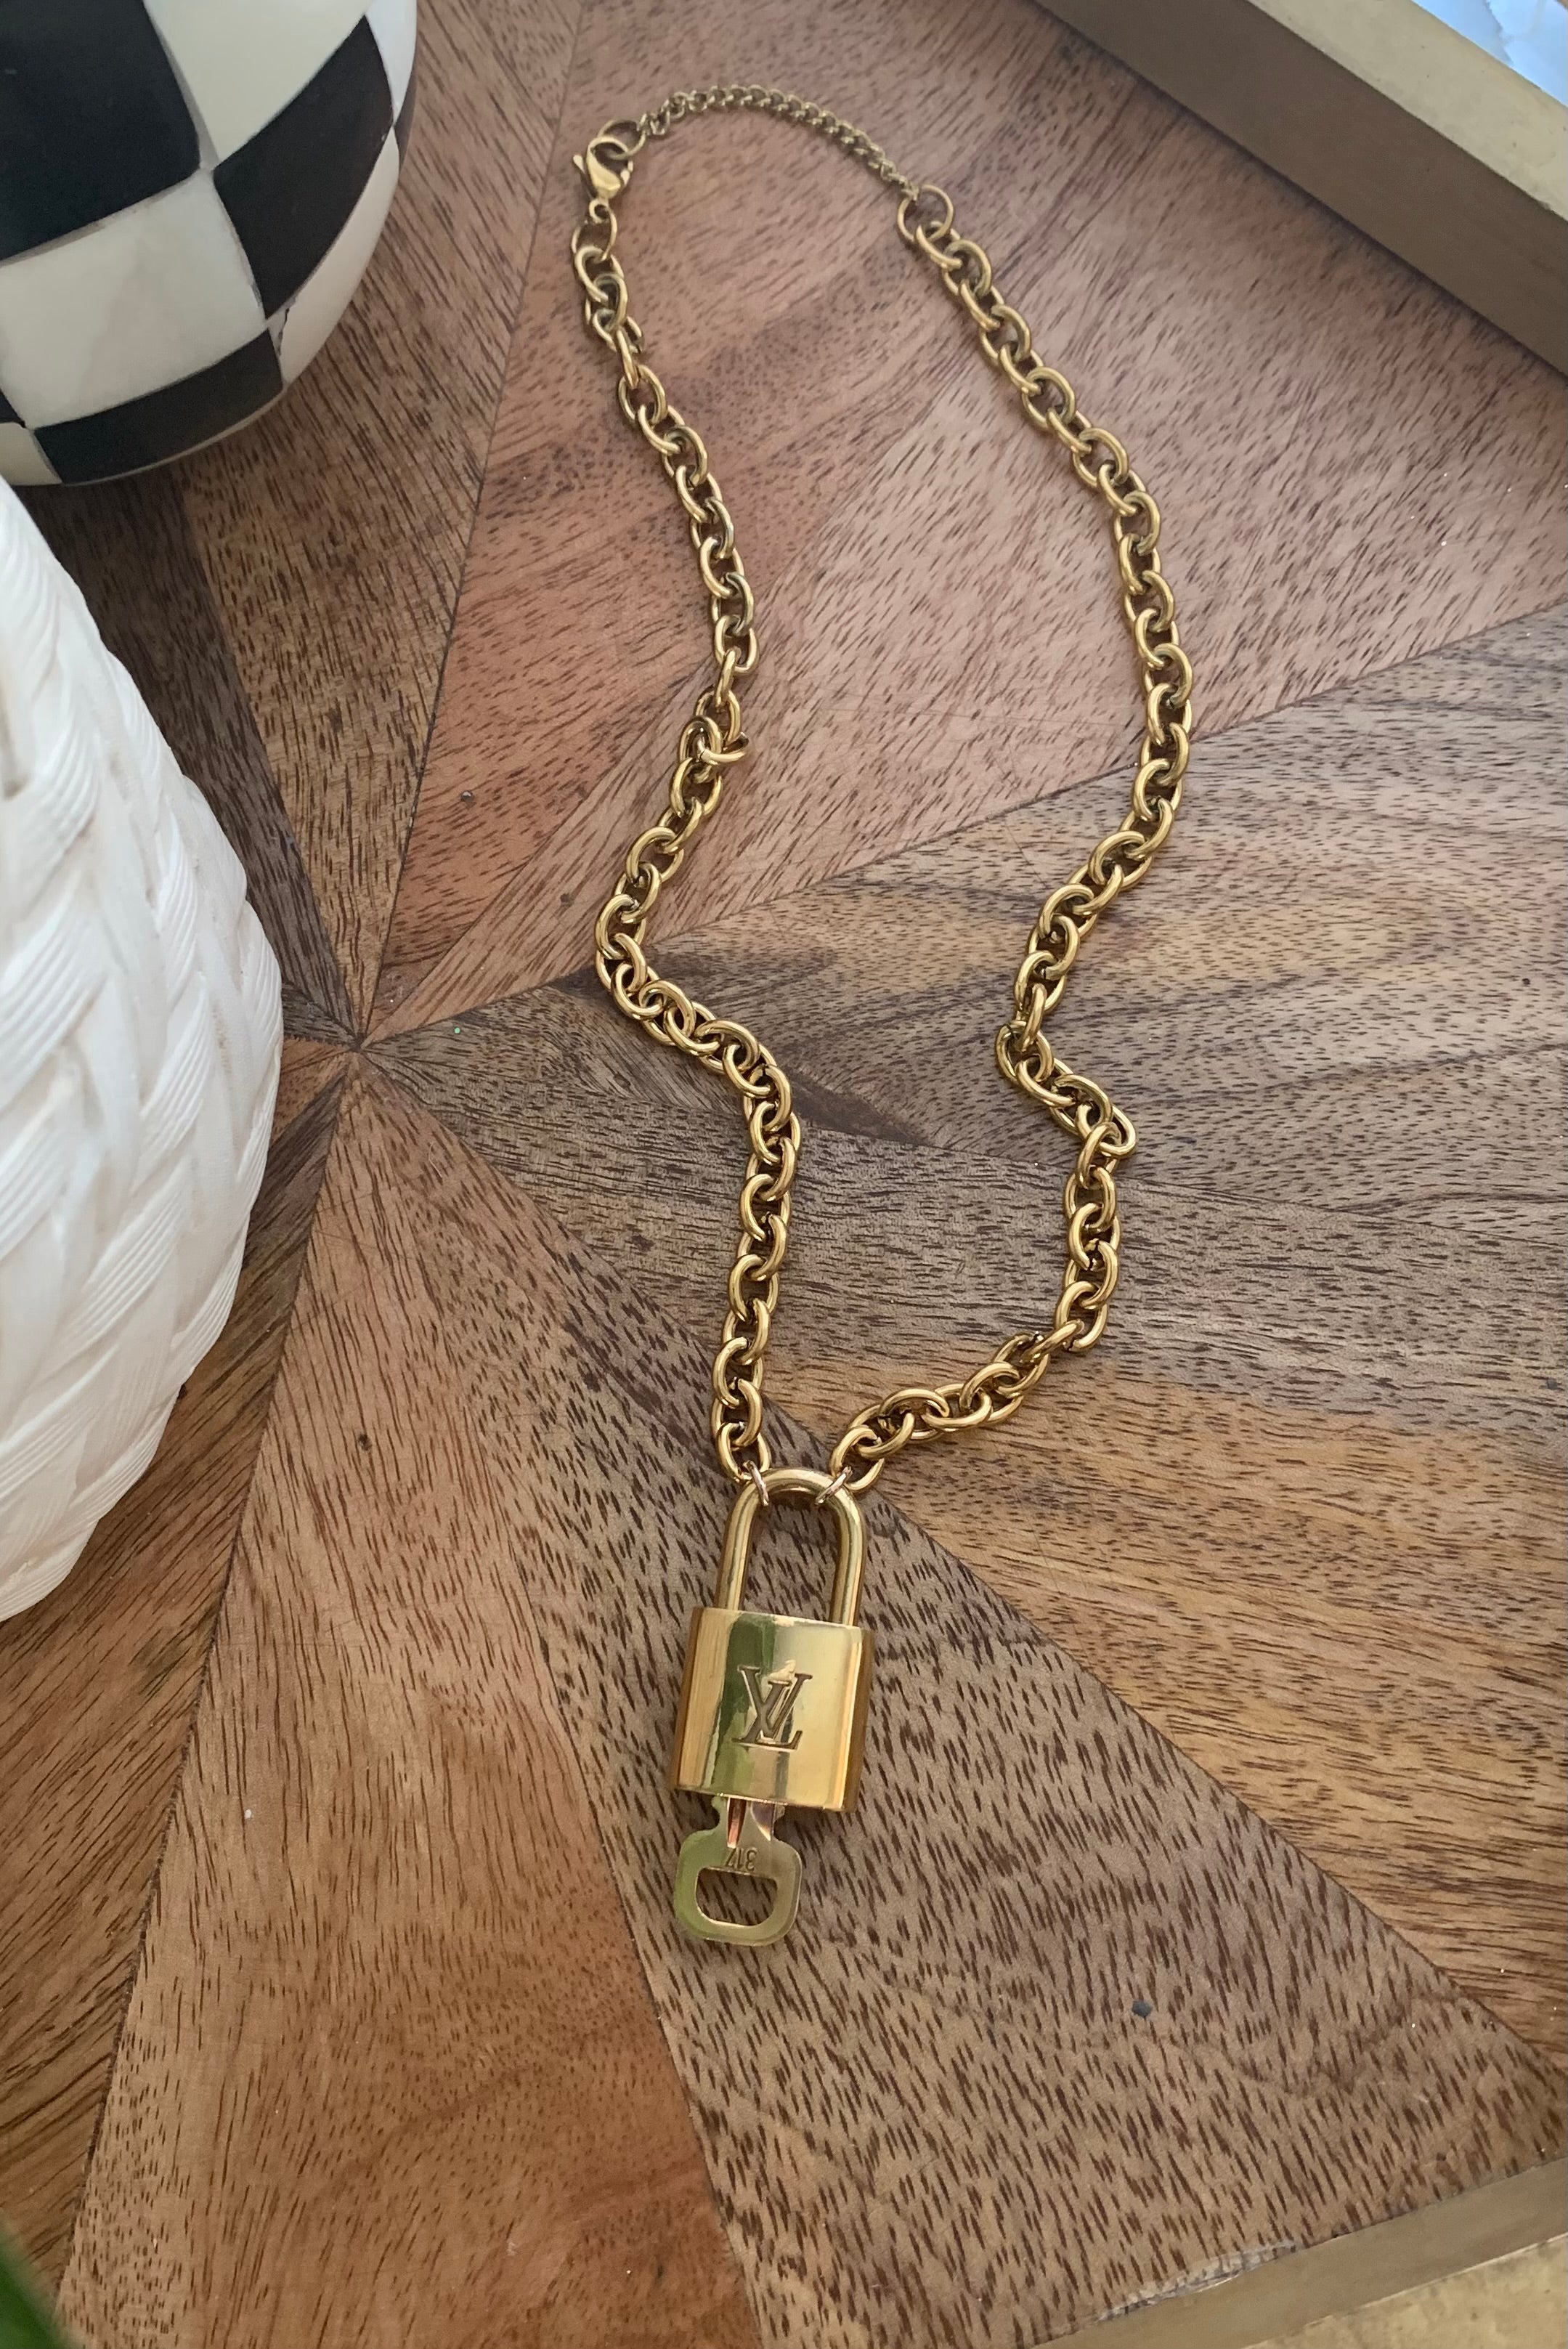 LV Lock & Key Necklace